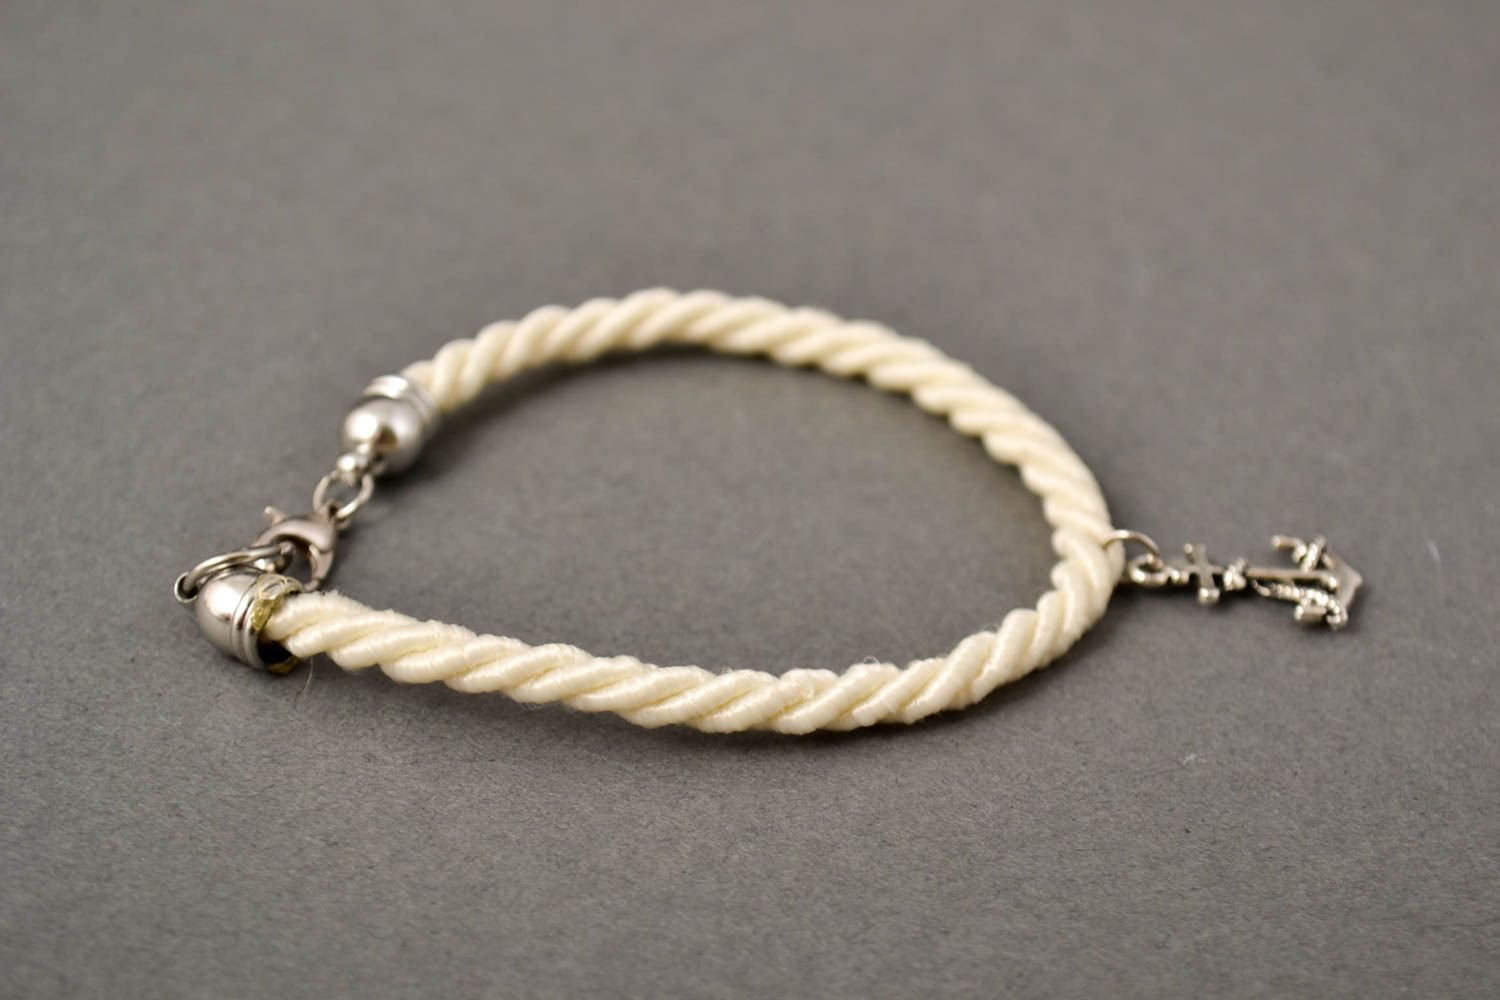 String bracelet handmade jewelry wrist bracelet charm bracelet gifts for girls photo 5